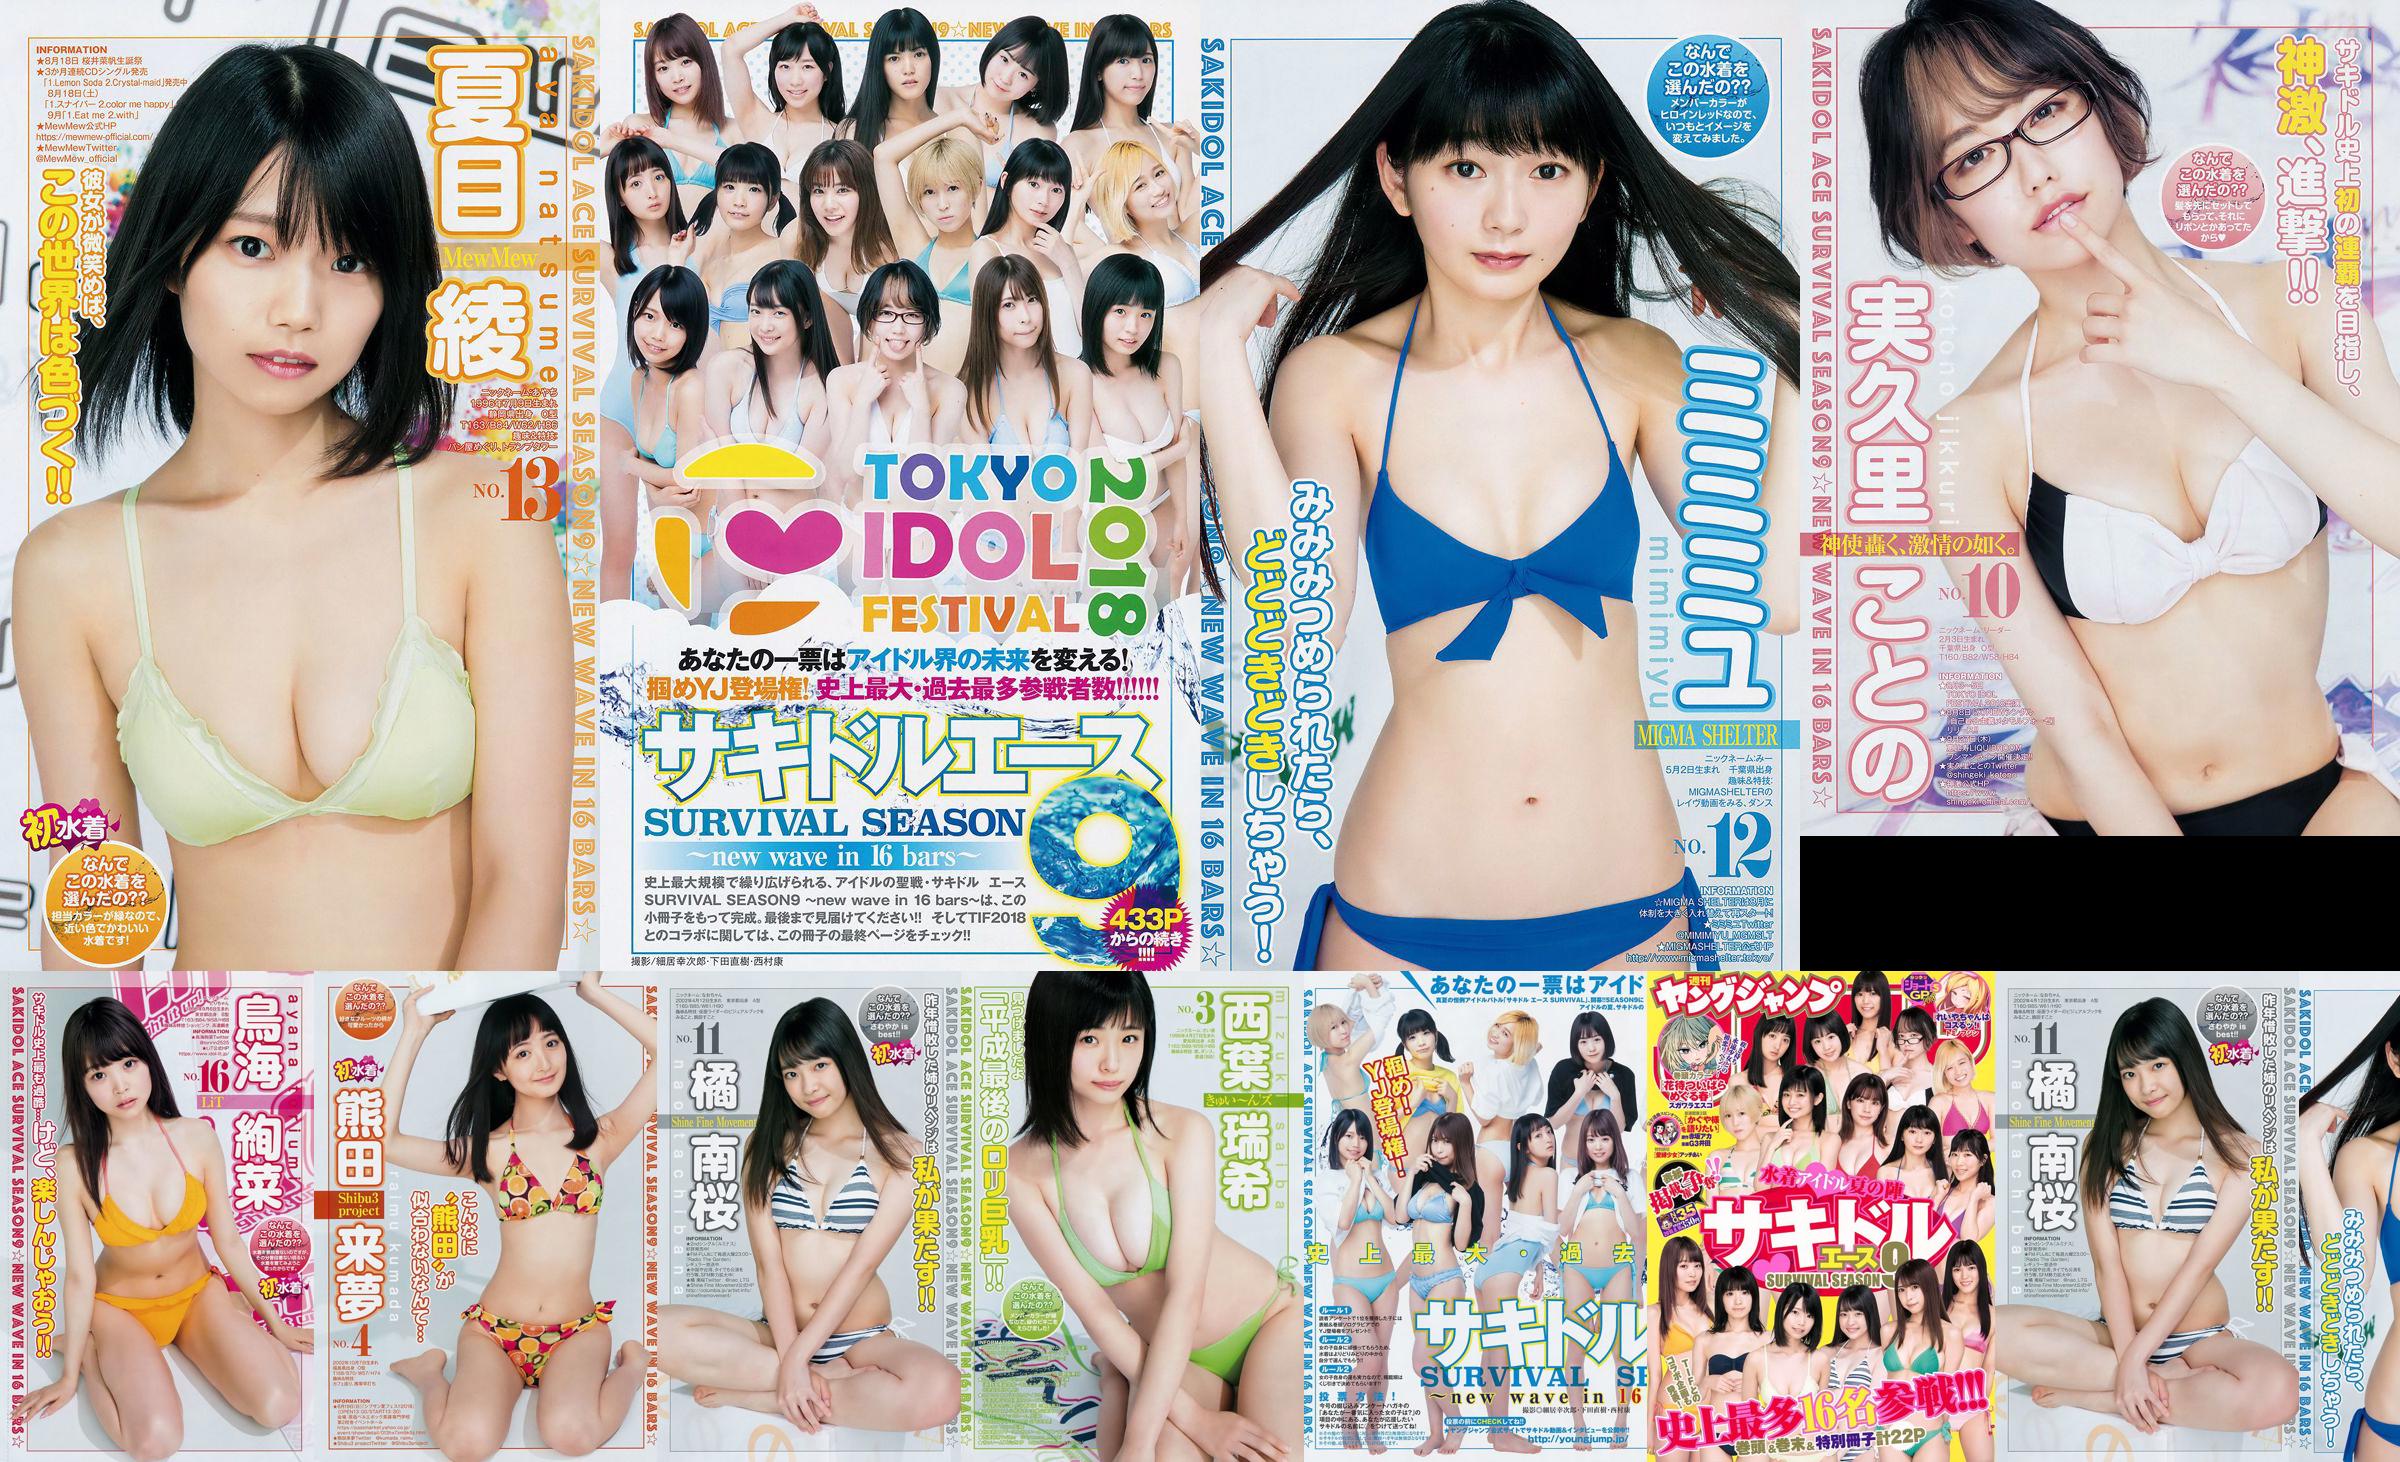 [FLASH] Ikumi Hisamatsu Risa Hirako Ren Ishikawa Angel Moe AKB48 Kaho Shibuya Misuzu Hayashi Ririka 2015.04.21 Photo Toshi No.d50a7b Page 1